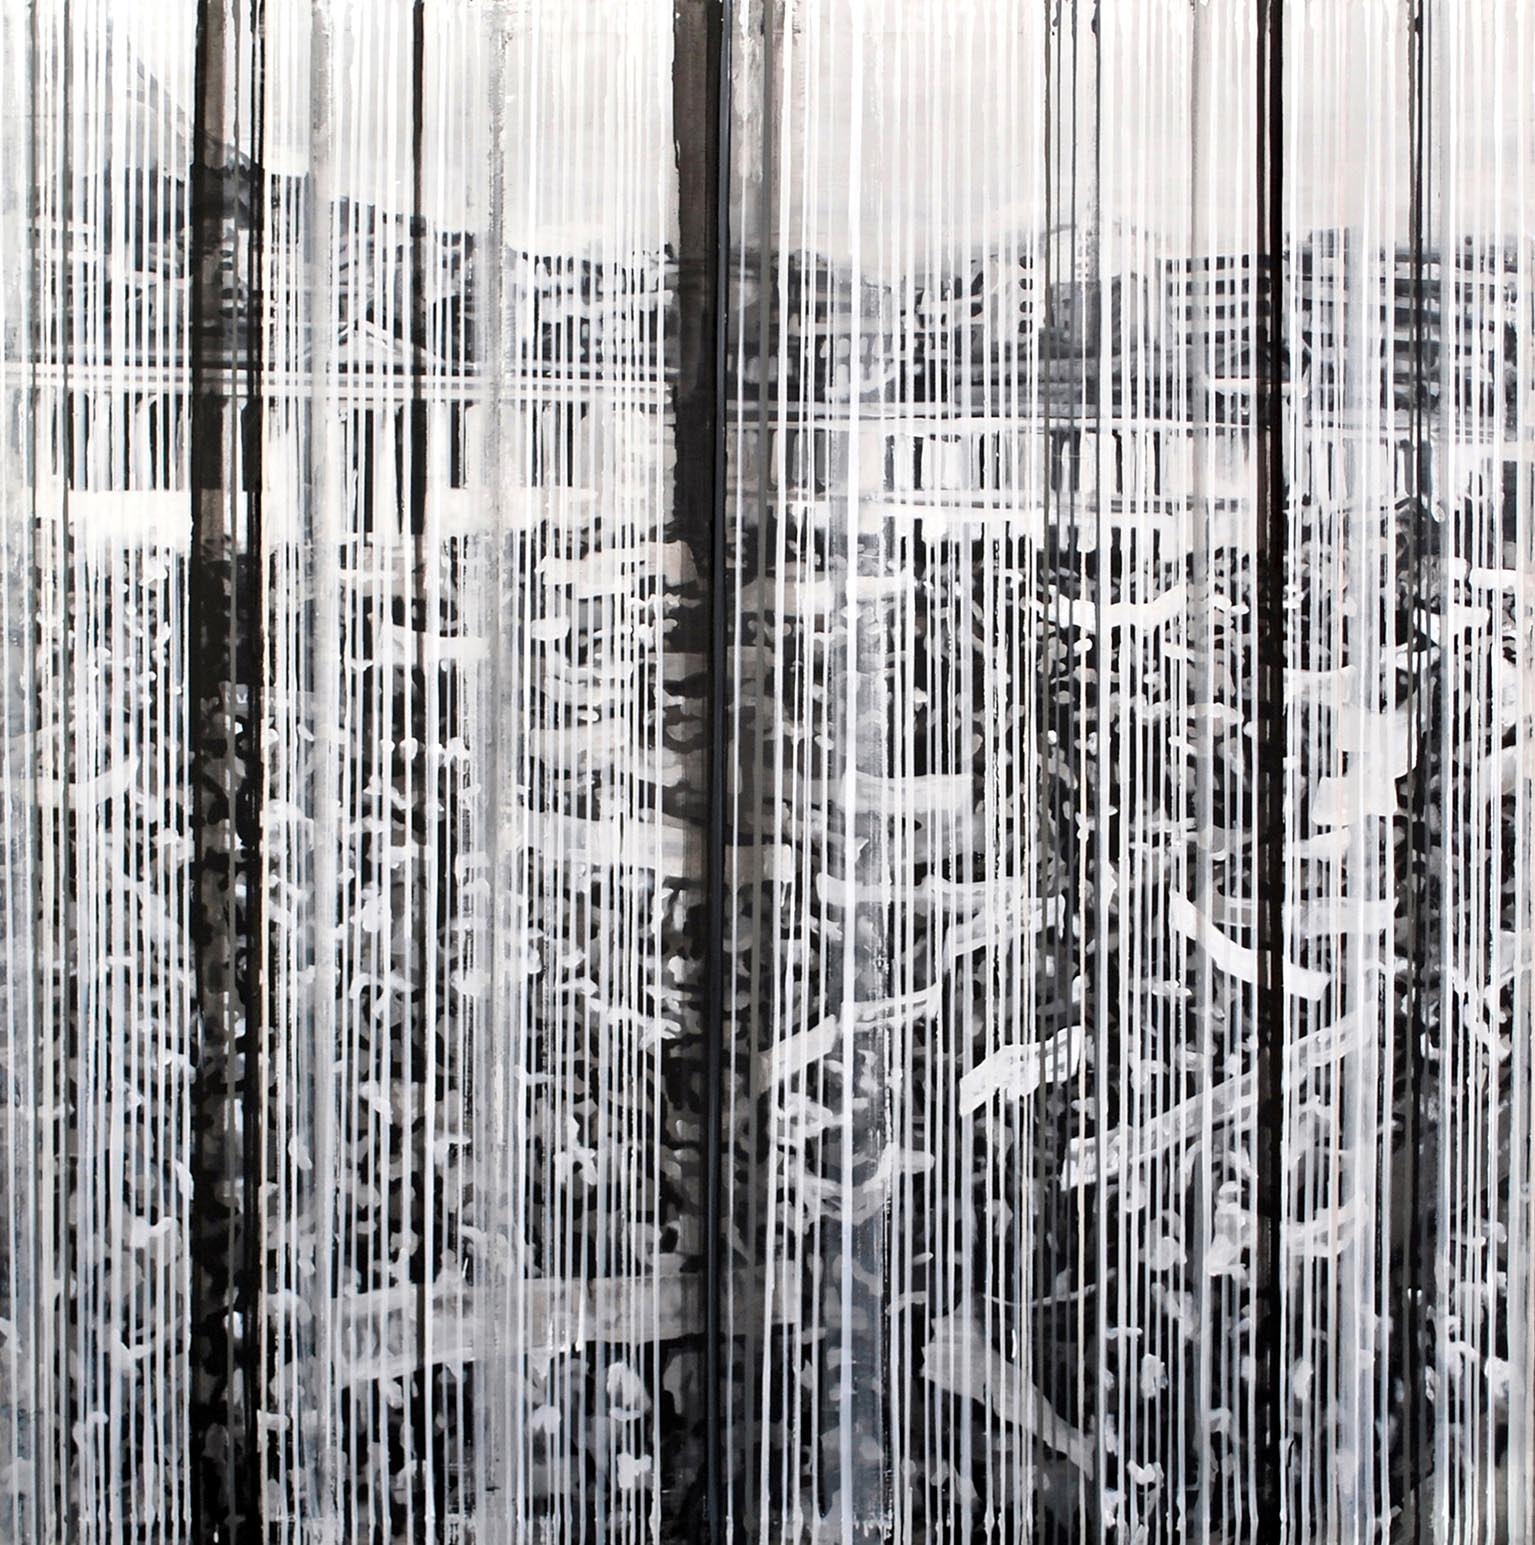 İsimsiz- Untitled, 2013, Tuval üzerine yağlıboya- Oil on canvas, 195x195 cm